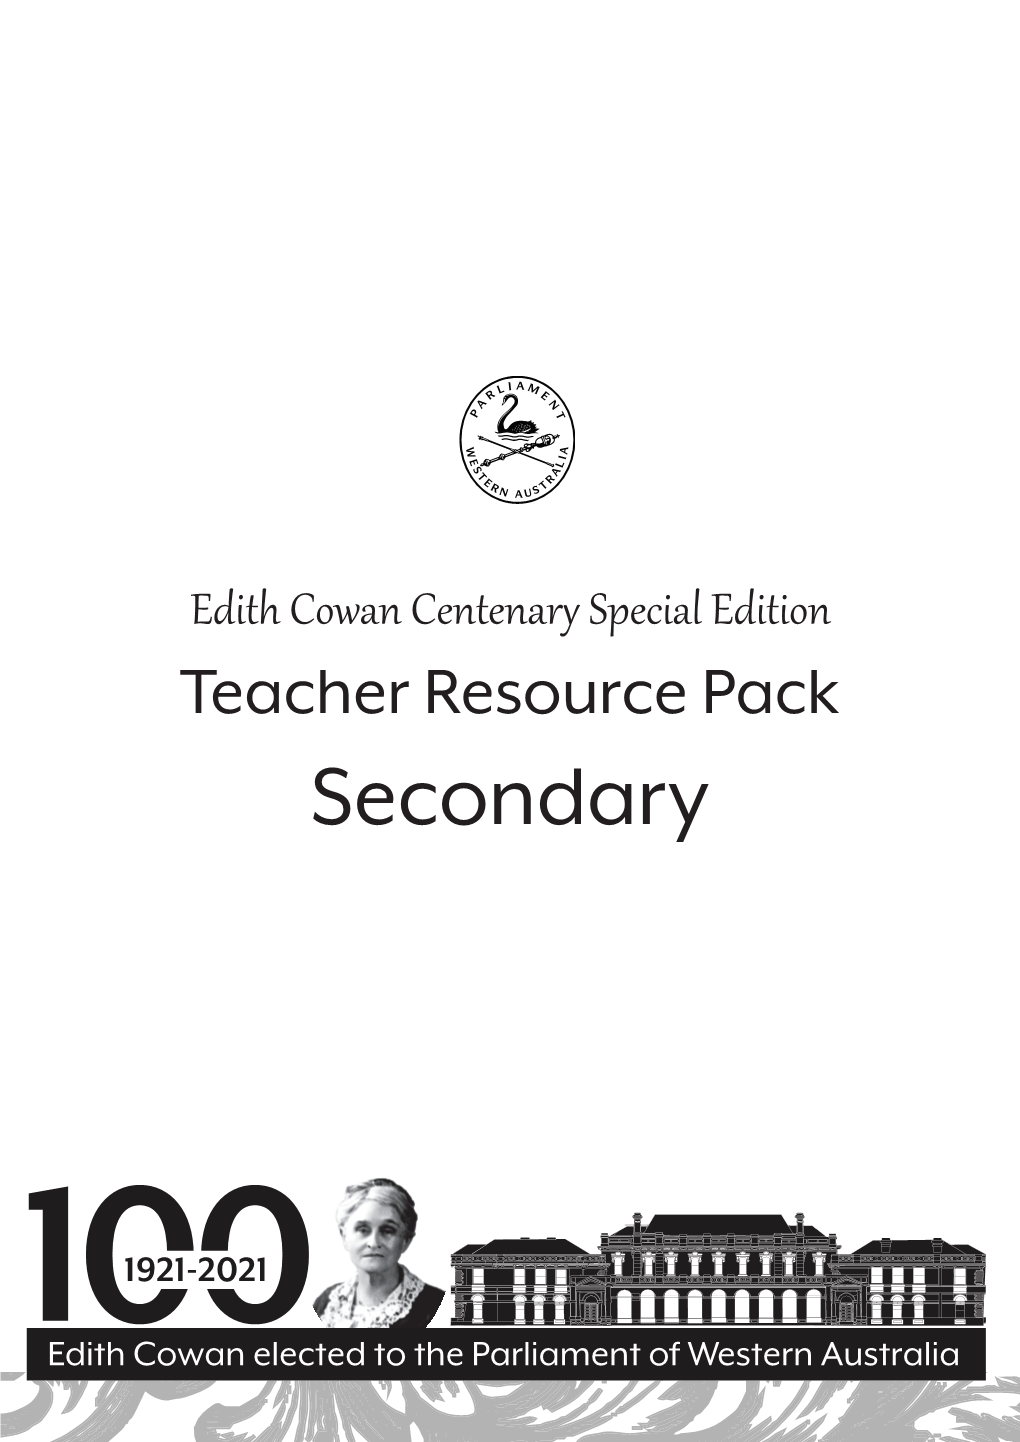 Edith Cowan Centenary Special Edition Teacher Resource Pack Secondary